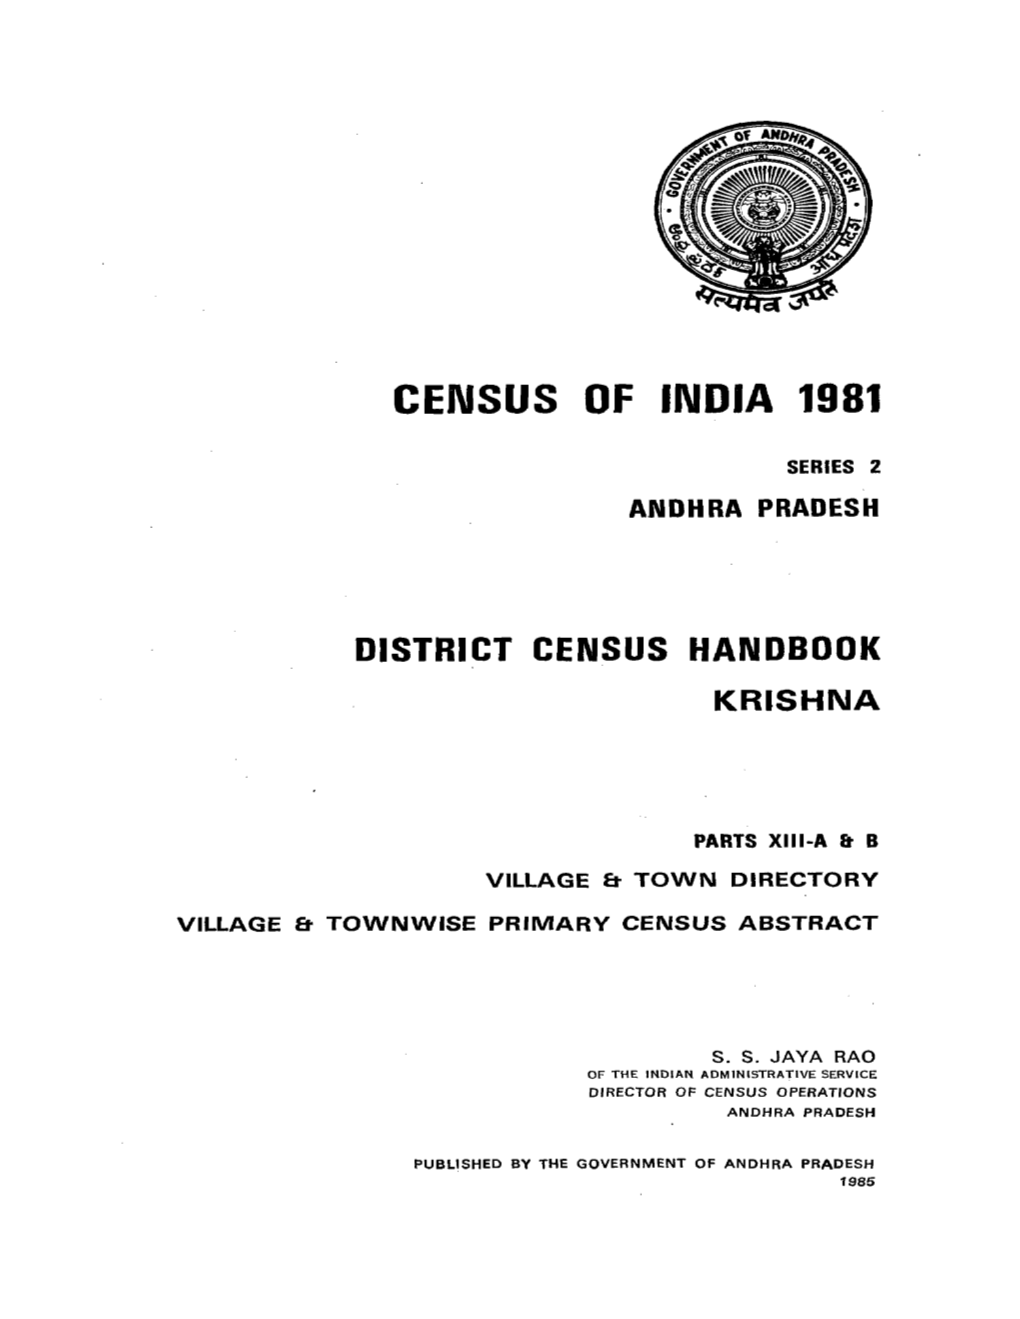 District Census Handbook, Krishna, Part XIII a & B, Series-2